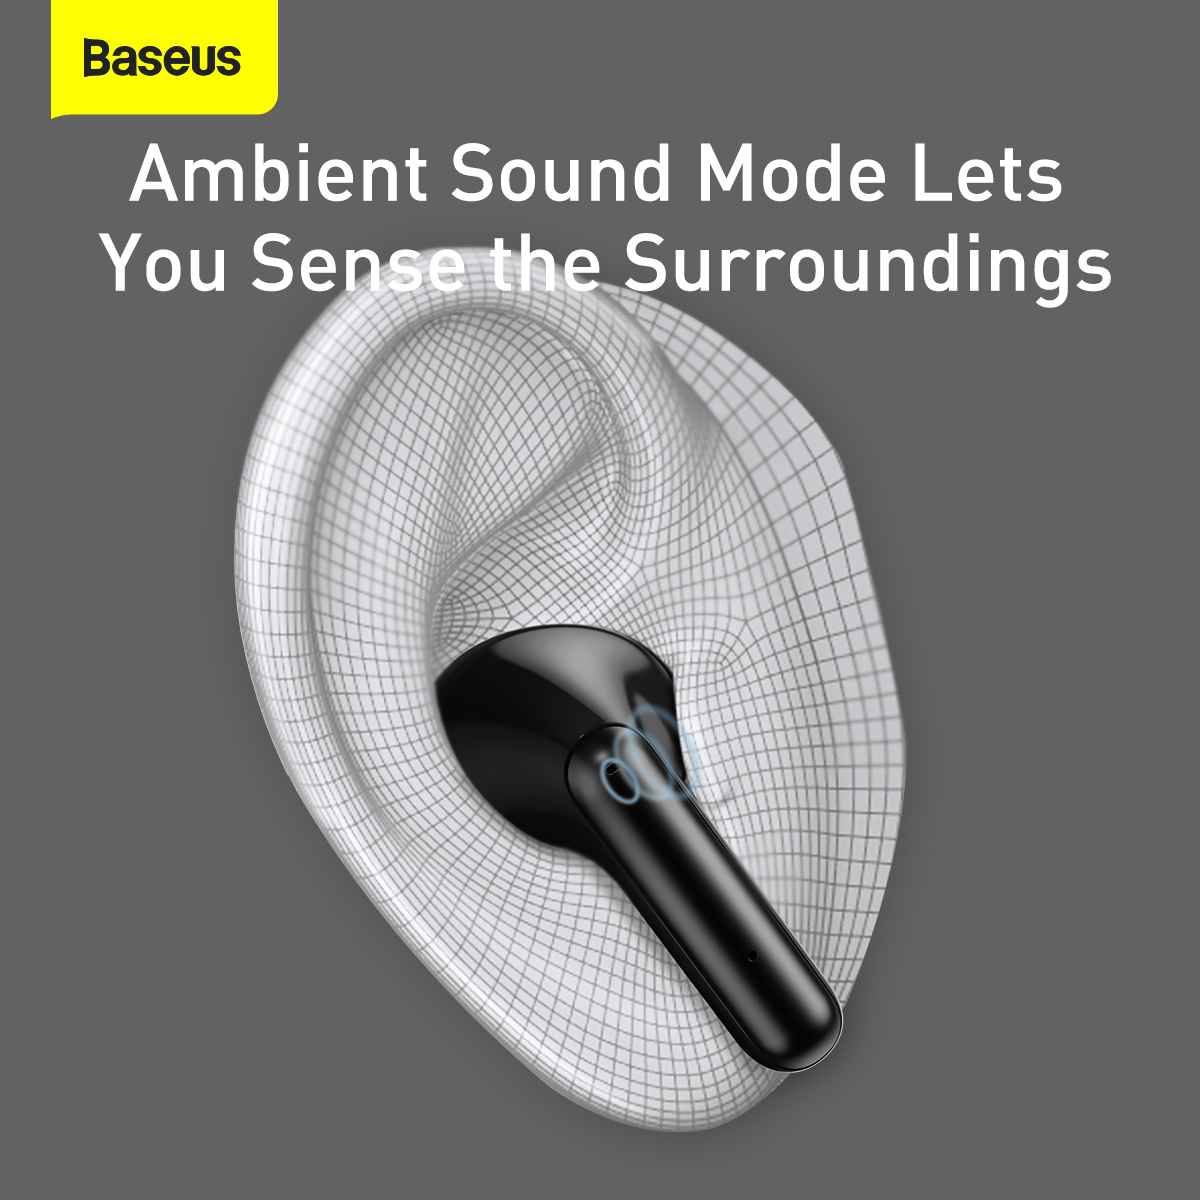 Baseus NGS1-01 S1 TWS trådlösa In Ear-hörlurar, svart